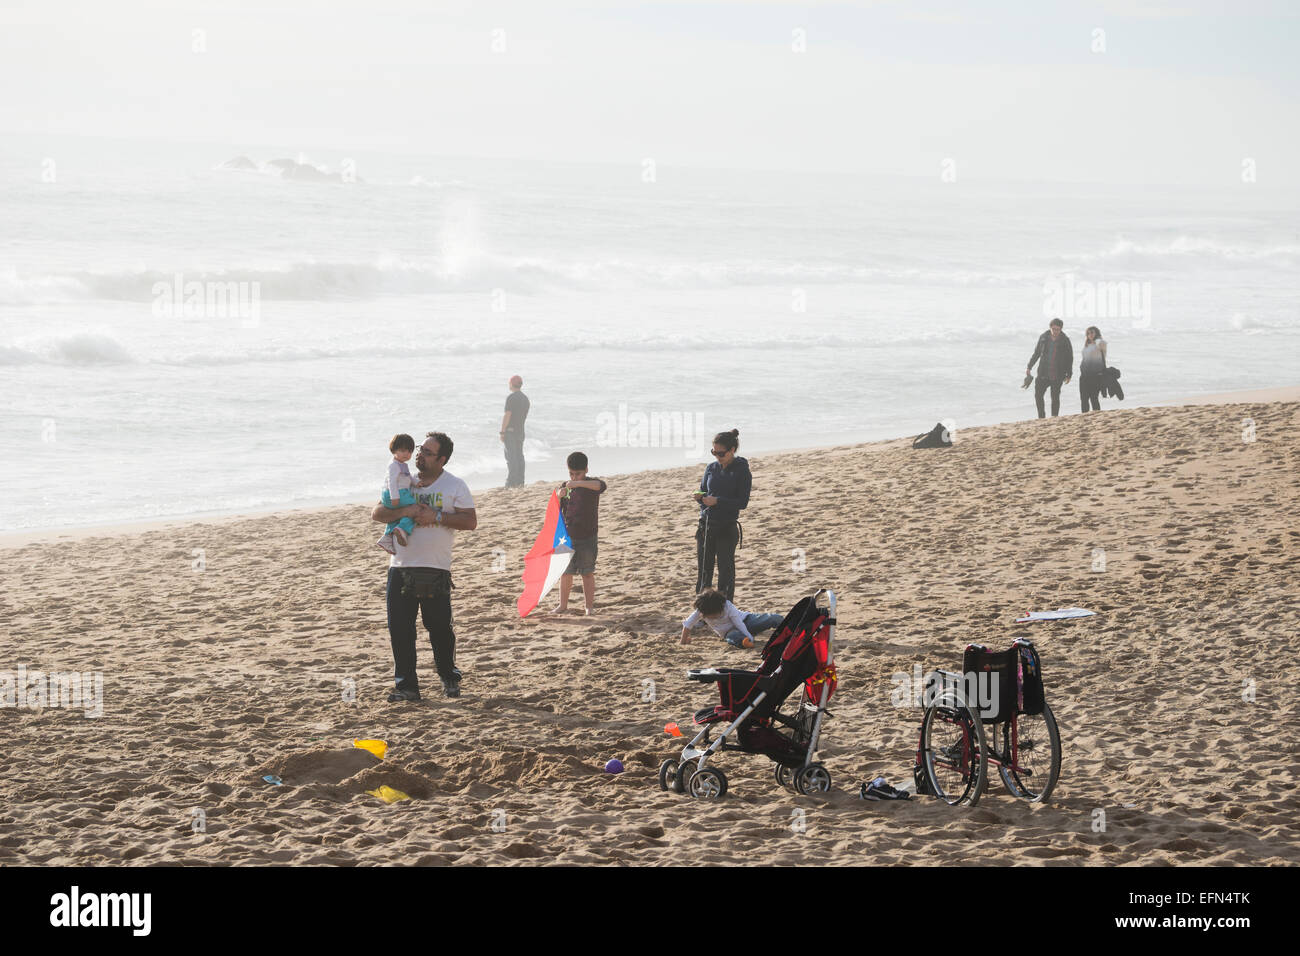 Local families enjoying the beach on a foggy day, Vina de Mar, Chile, South America Stock Photo